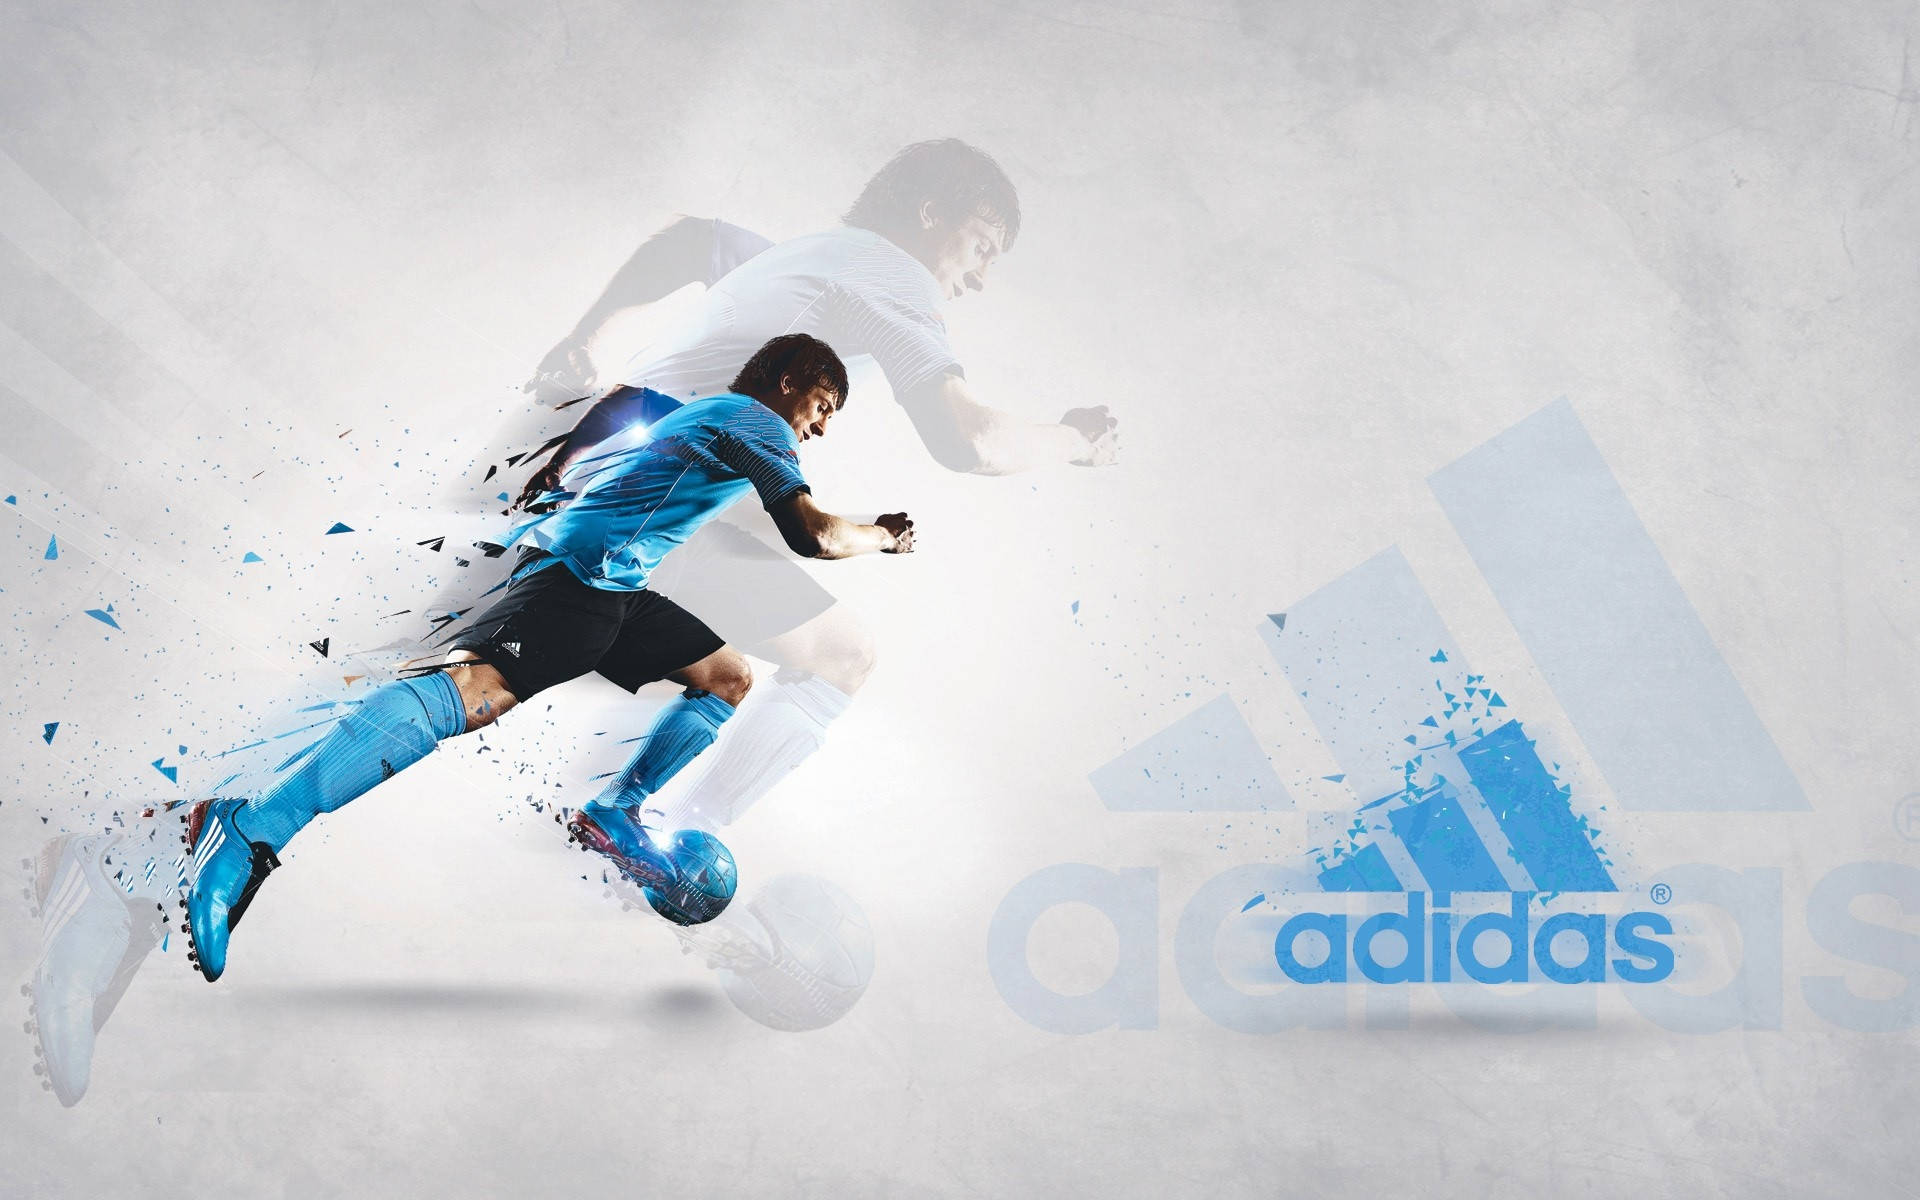 Lionel Messi Adidas Poster Background